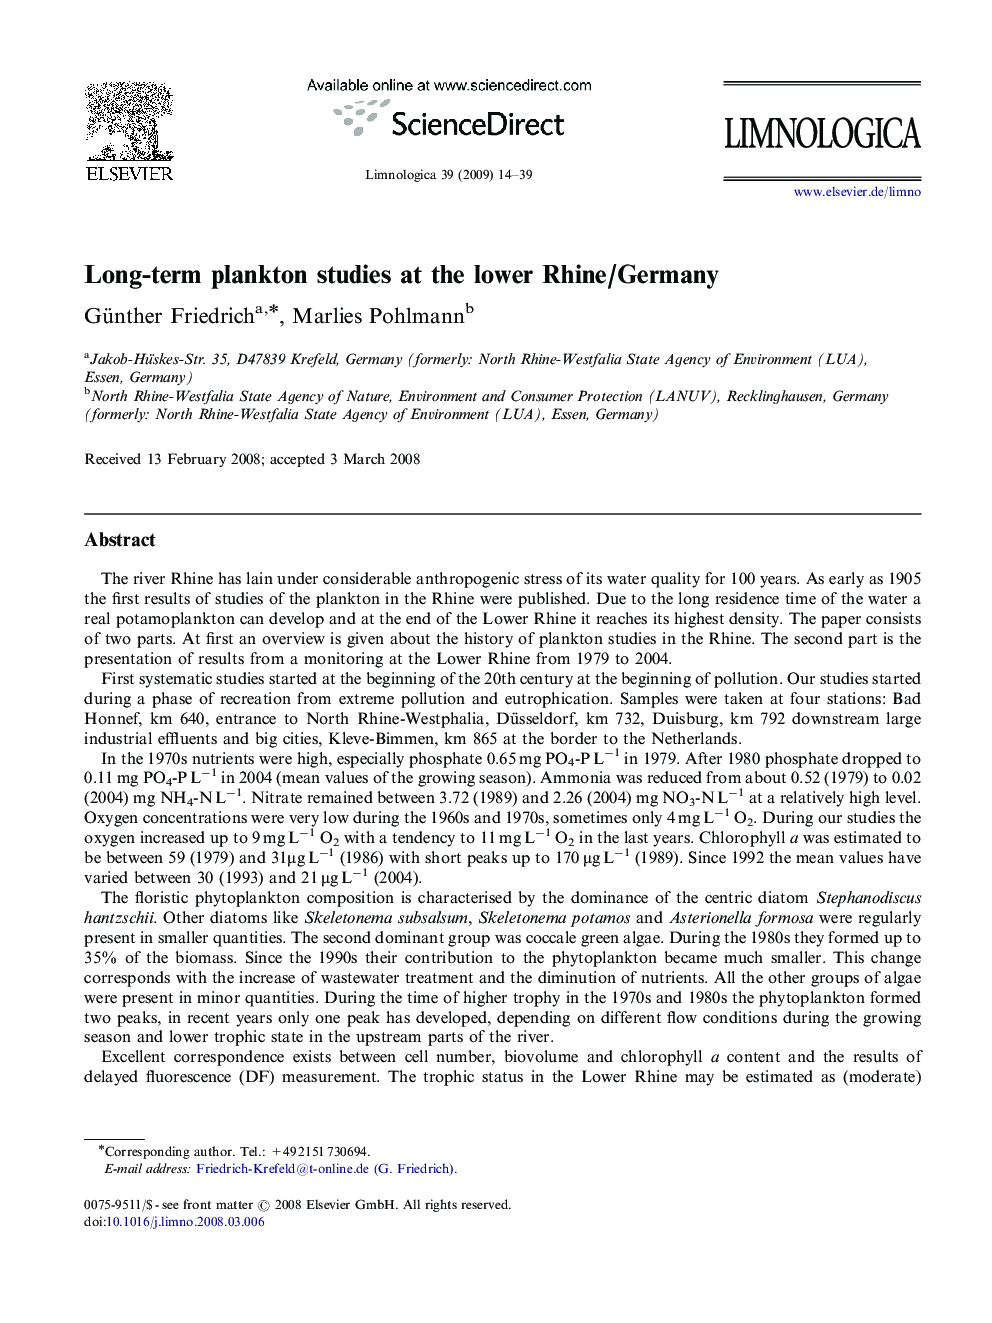 Long-term plankton studies at the lower Rhine/Germany